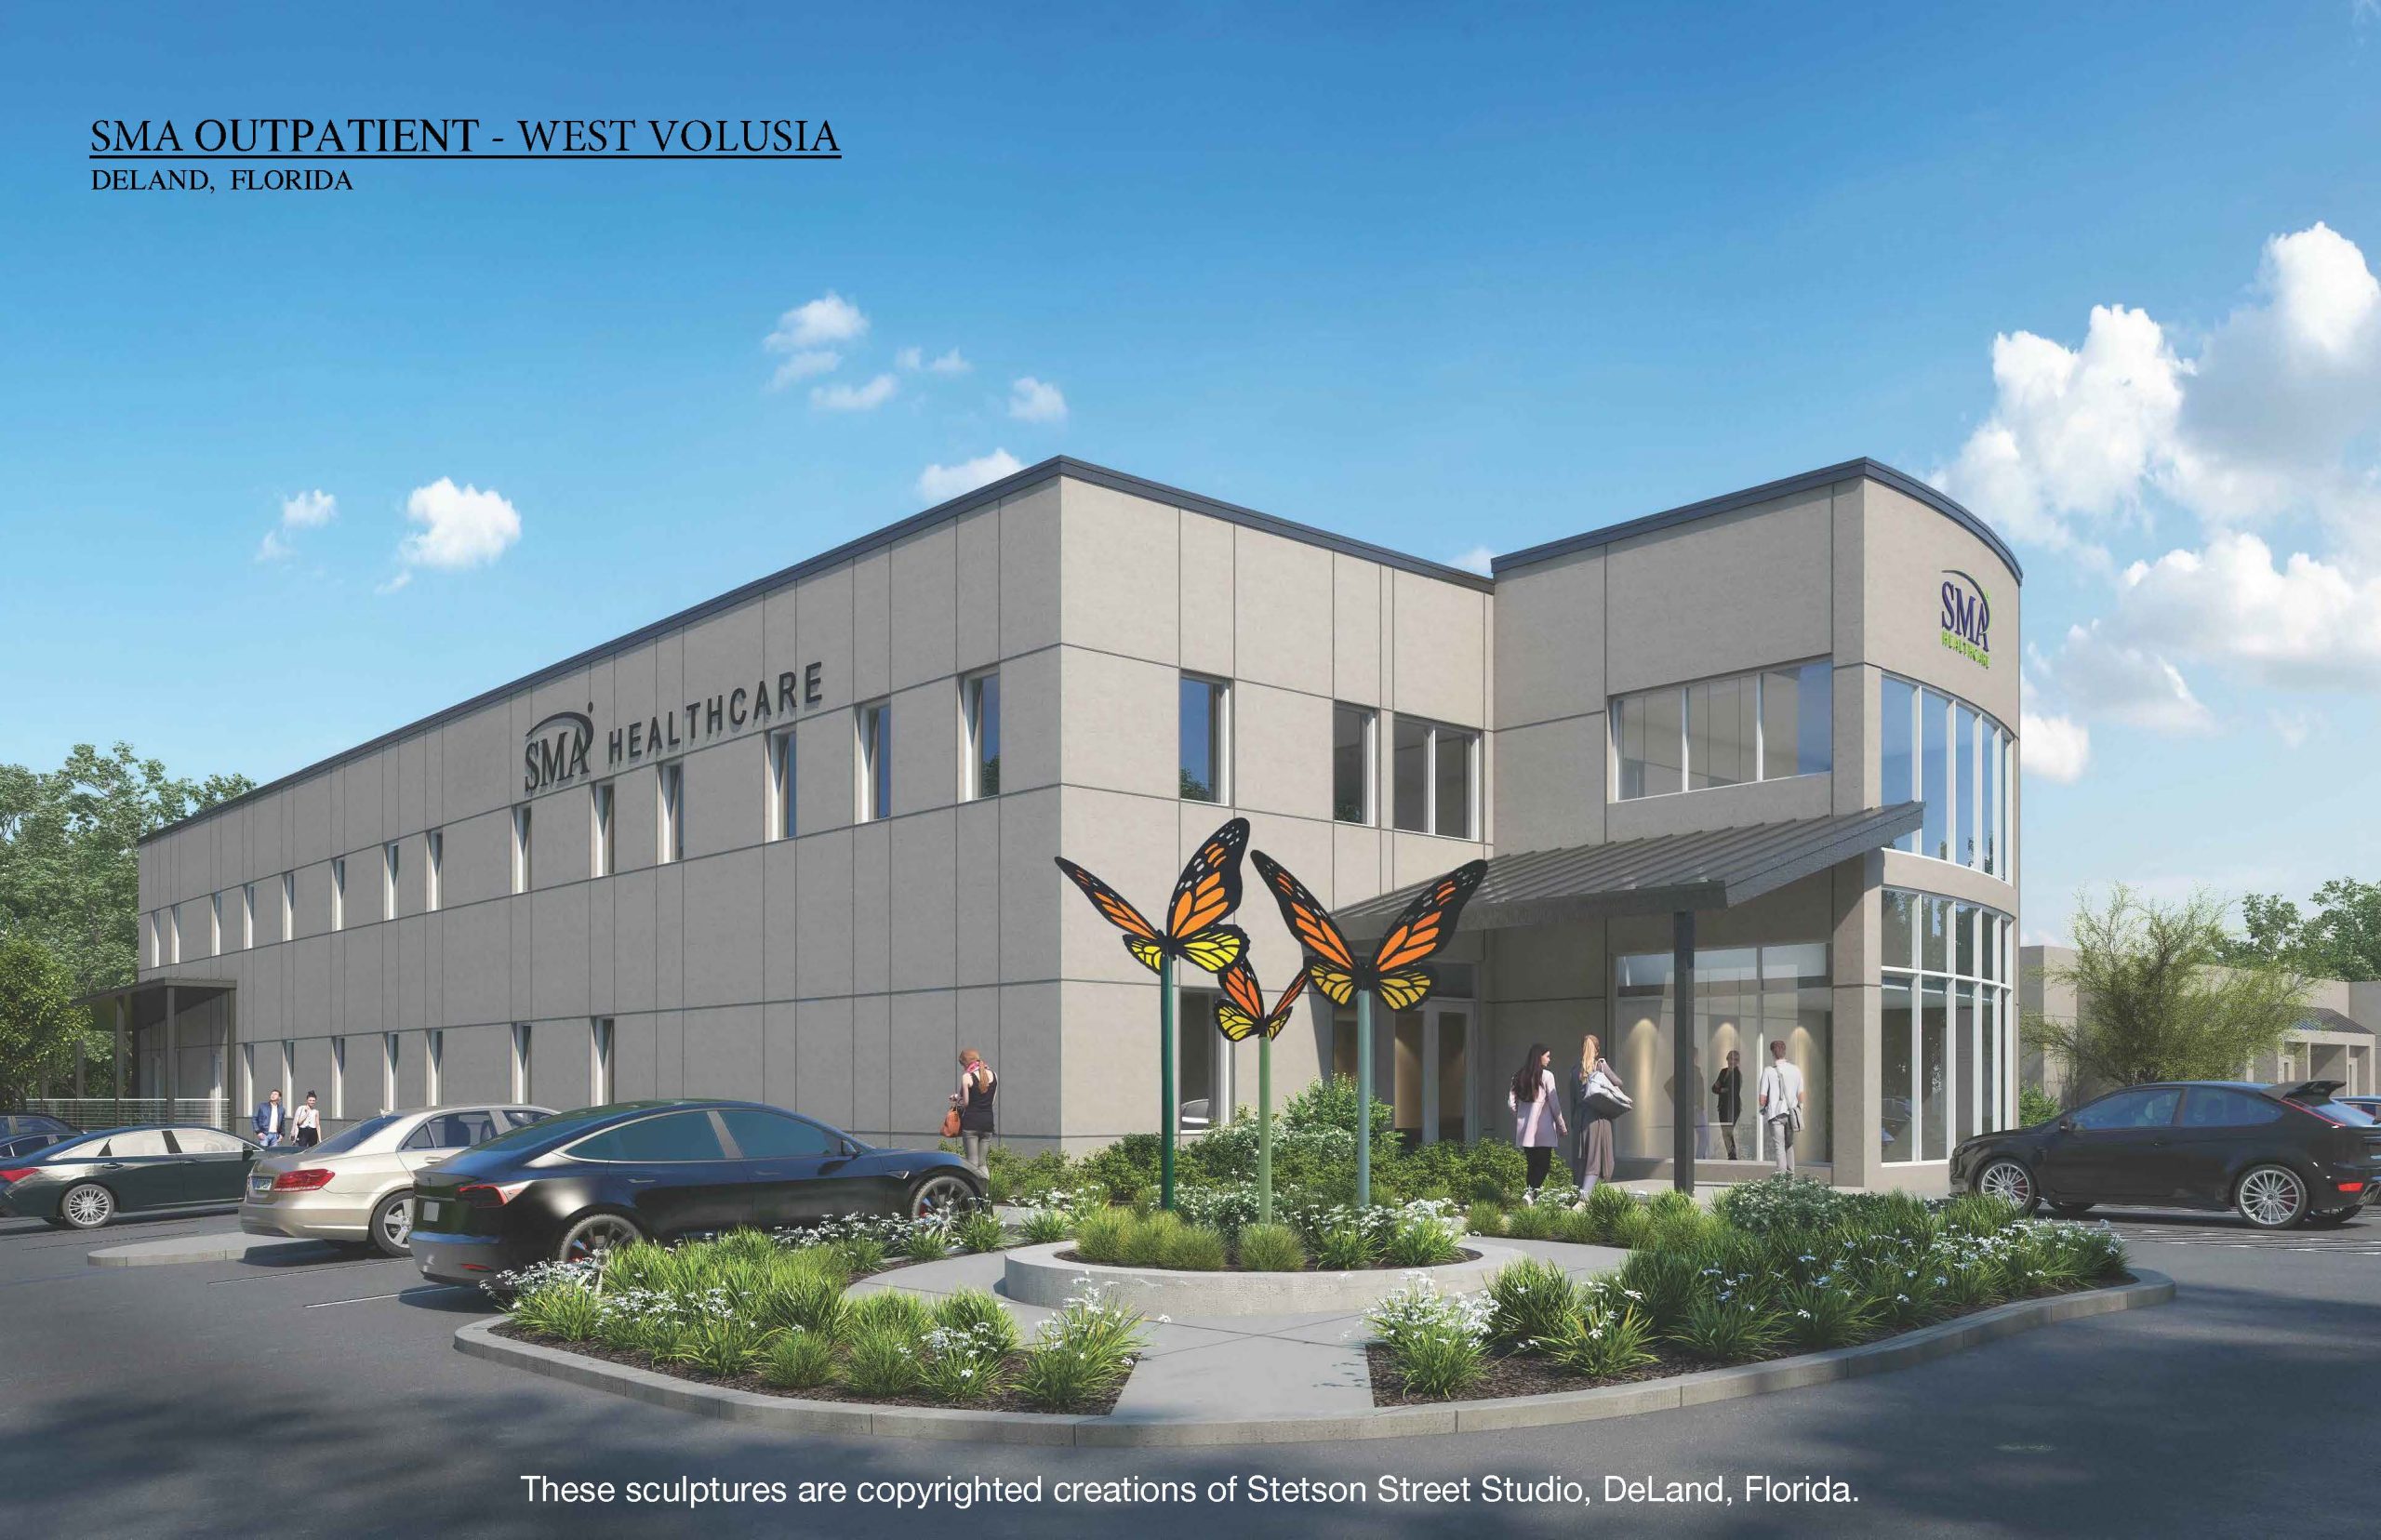 SMA Healthcare Announces New West Volusia Outpatient Care Center